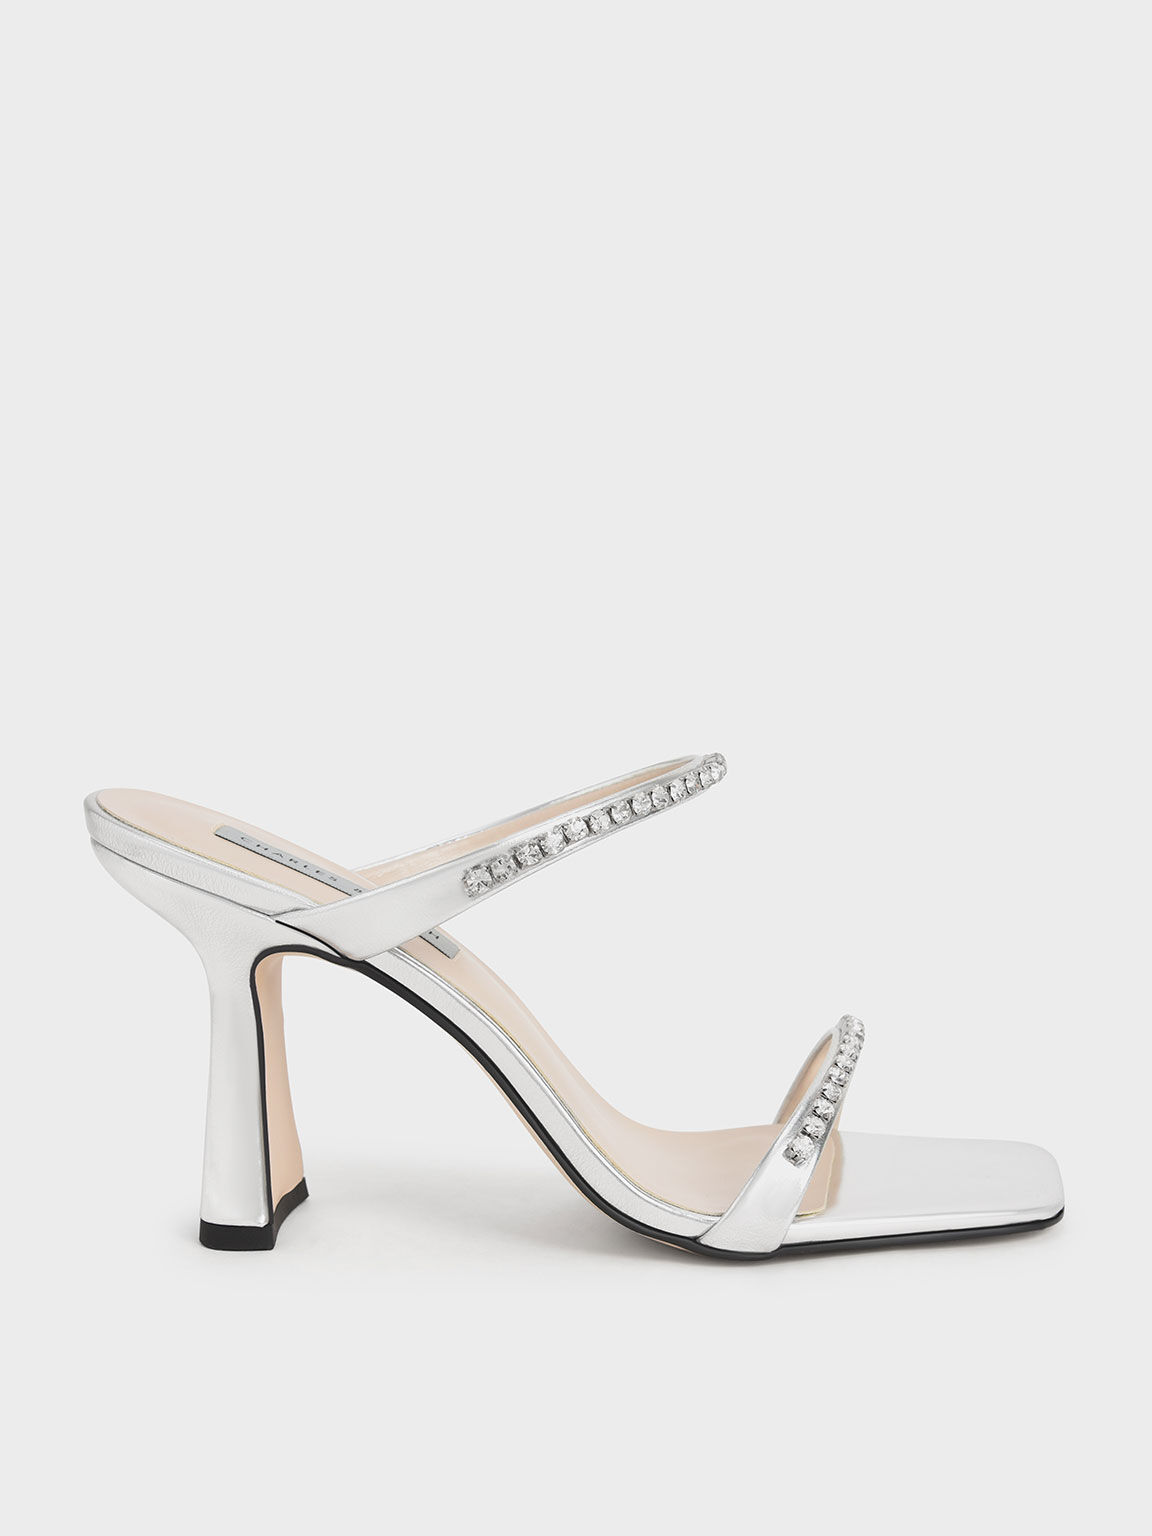 Guess Sella Mirror Metallic Ankle Strap Stiletto Dress Sandals | Dillard's